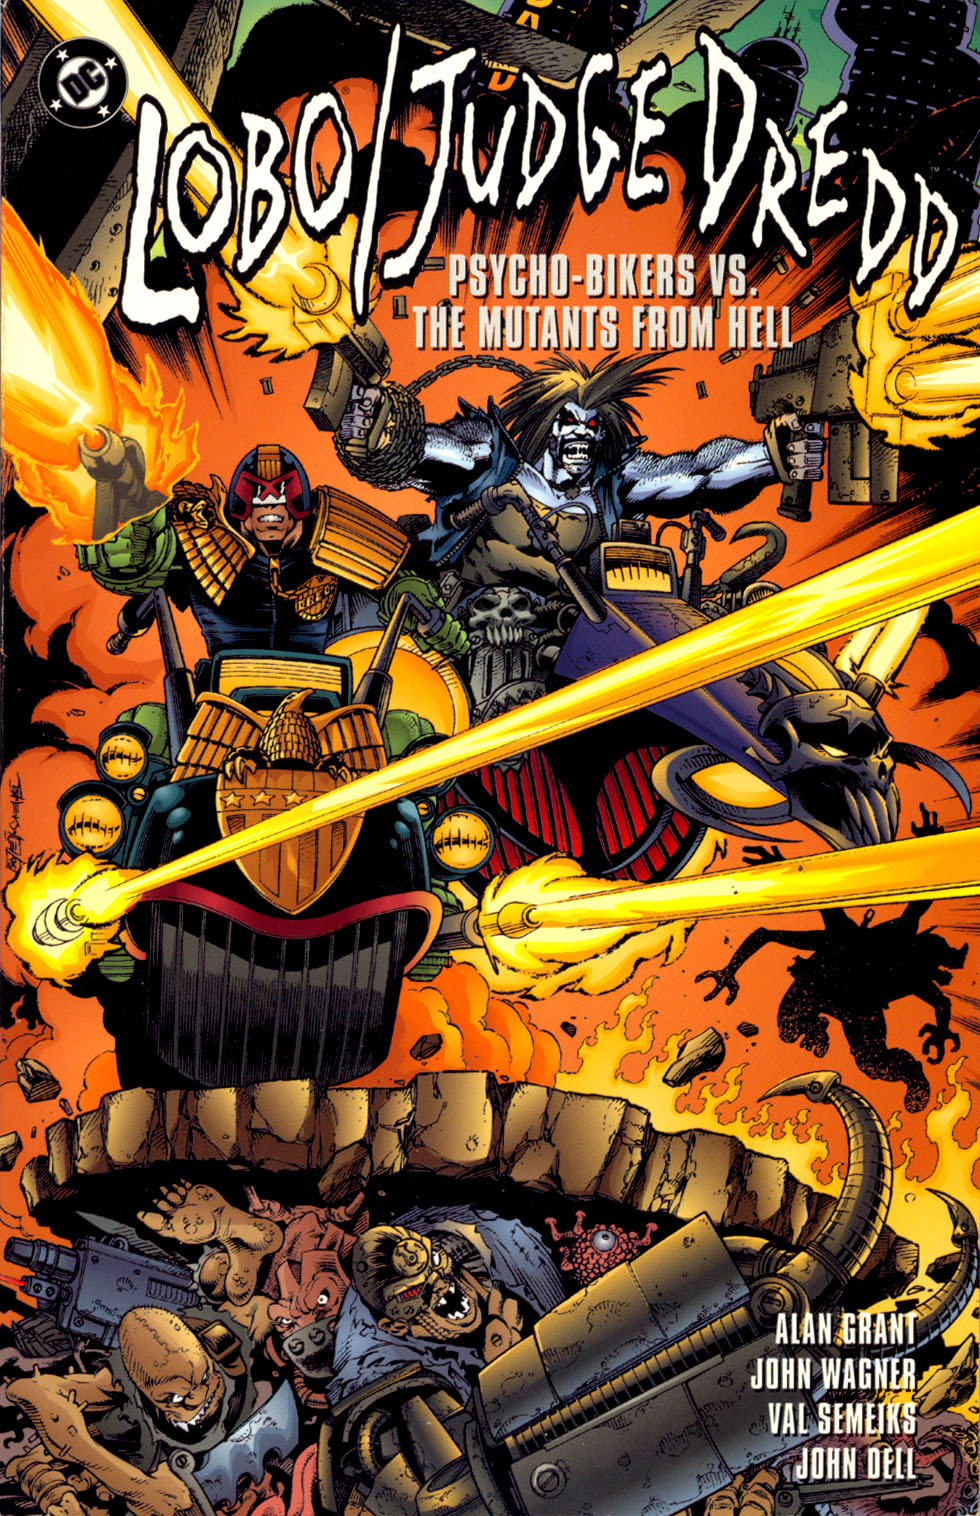 Read online Lobo/Judge Dredd: Psycho Bikers vs. the Mutants From Hell comic -  Issue # Full - 1